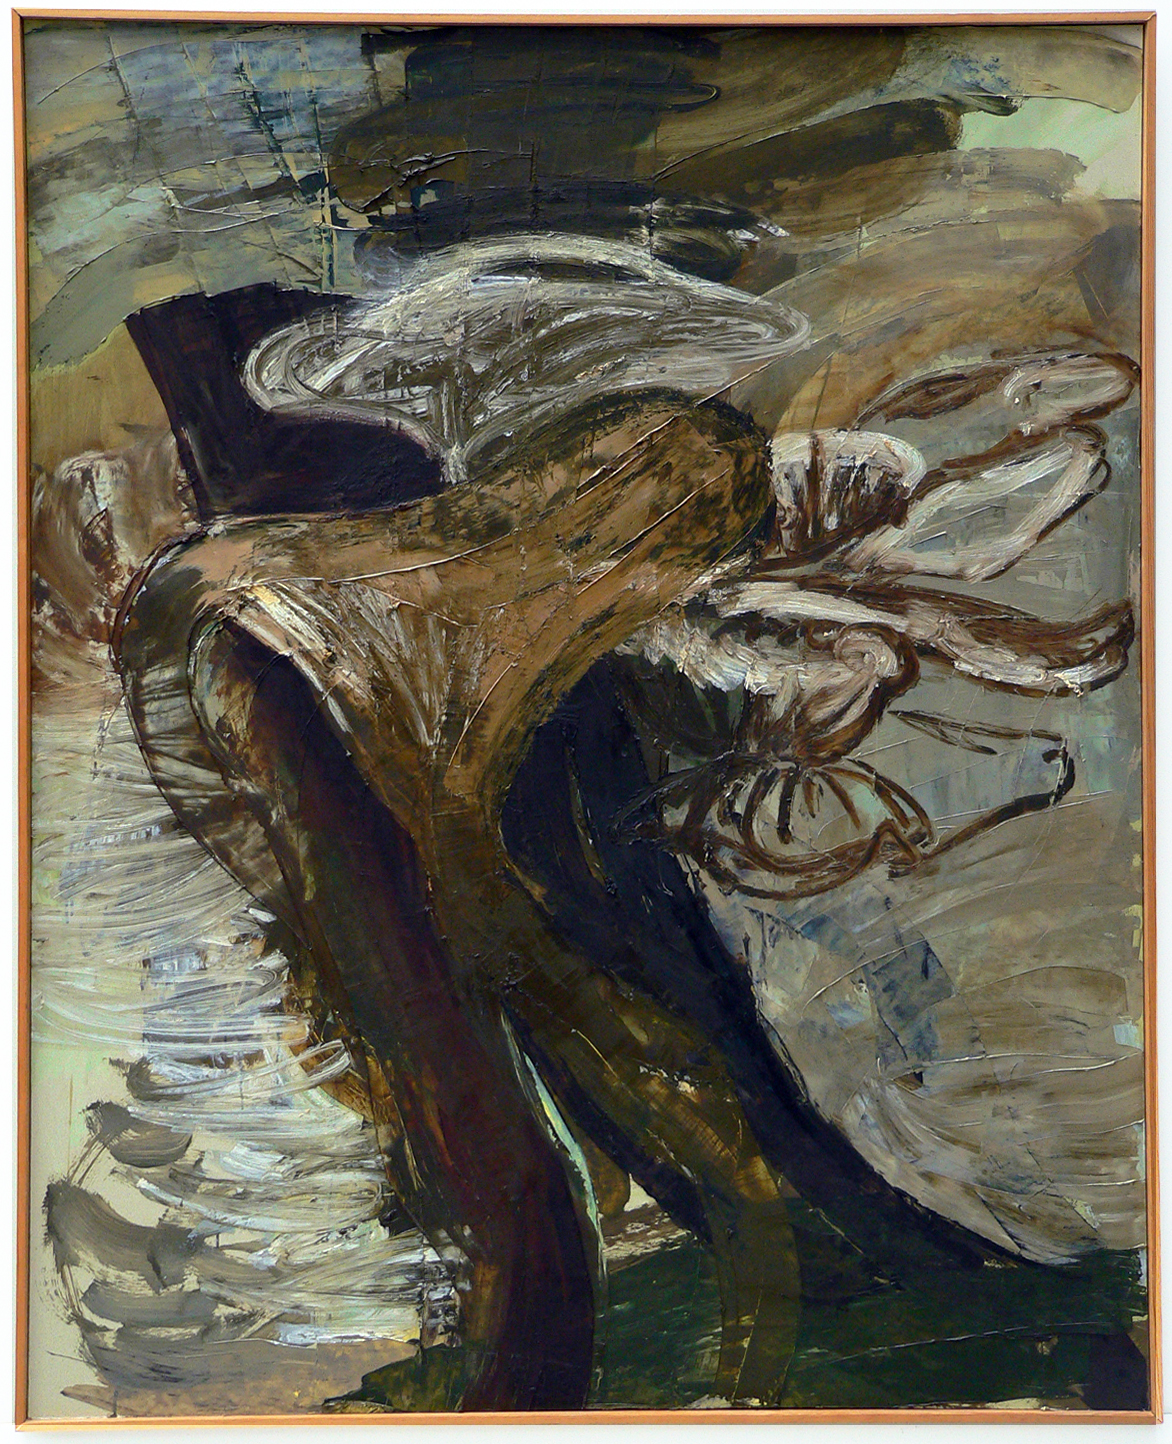 Baumpilz, 2001, Öl auf Pappe, 135 x 108 cm